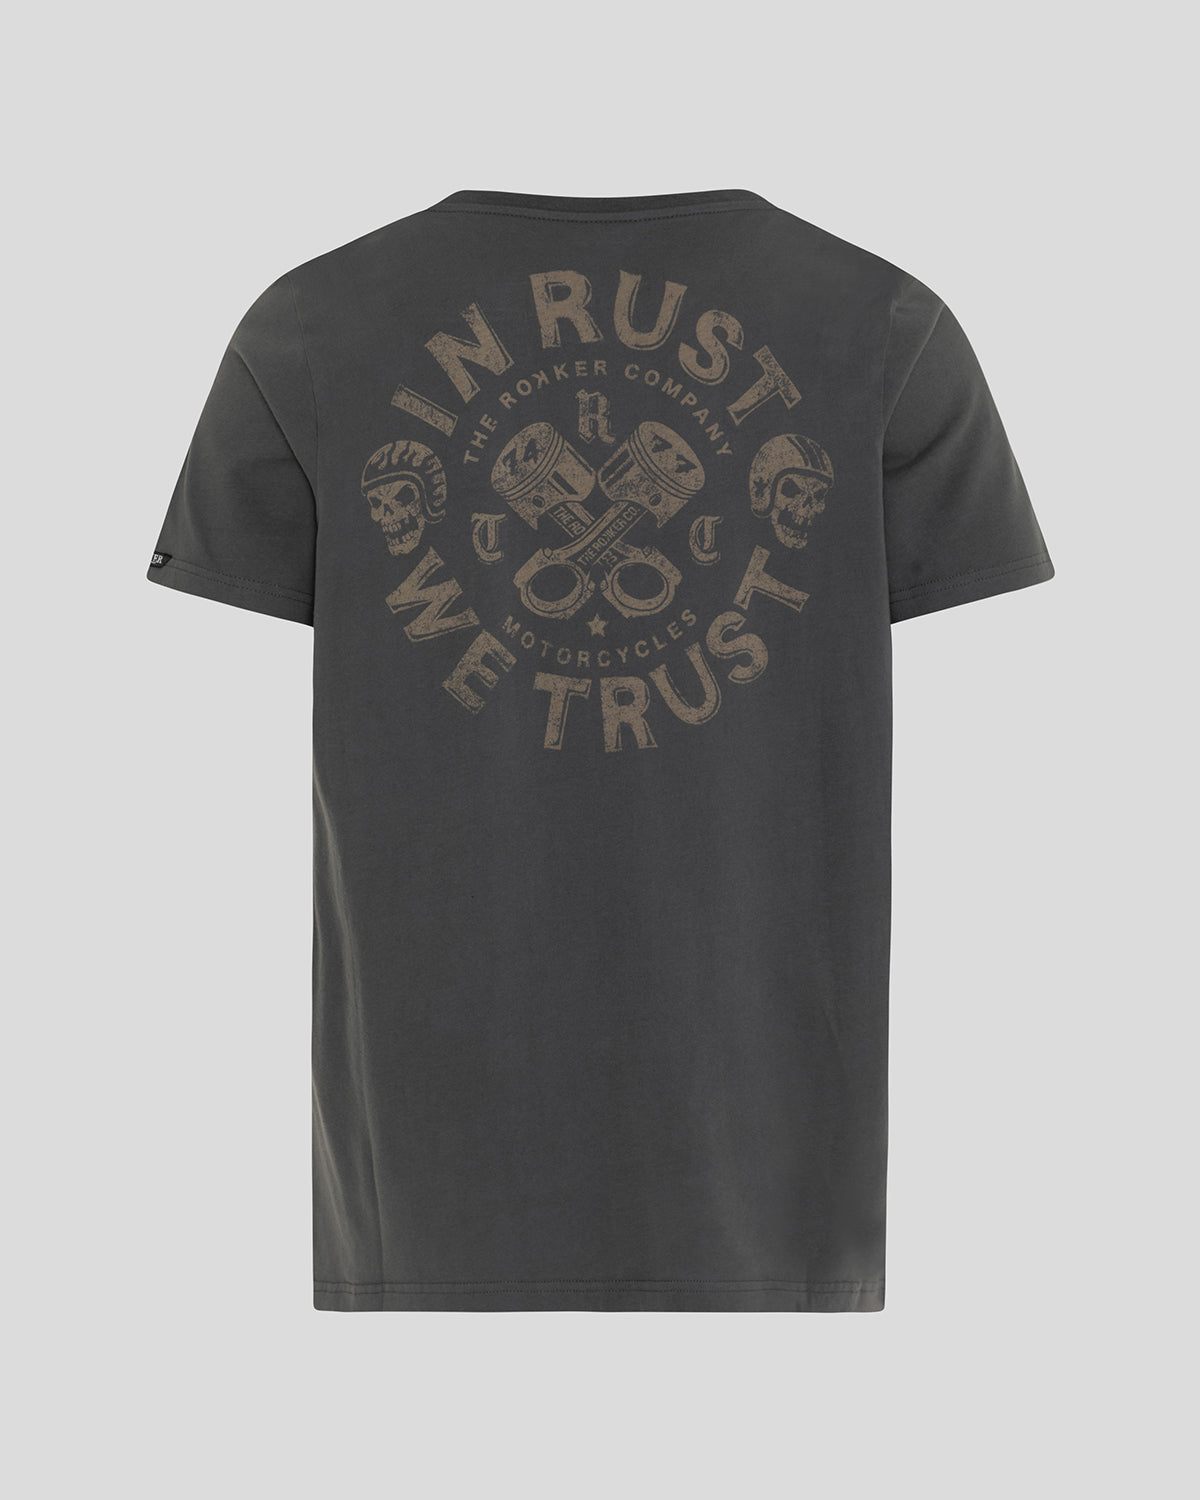 In Rust T-Shirt Dark Grey